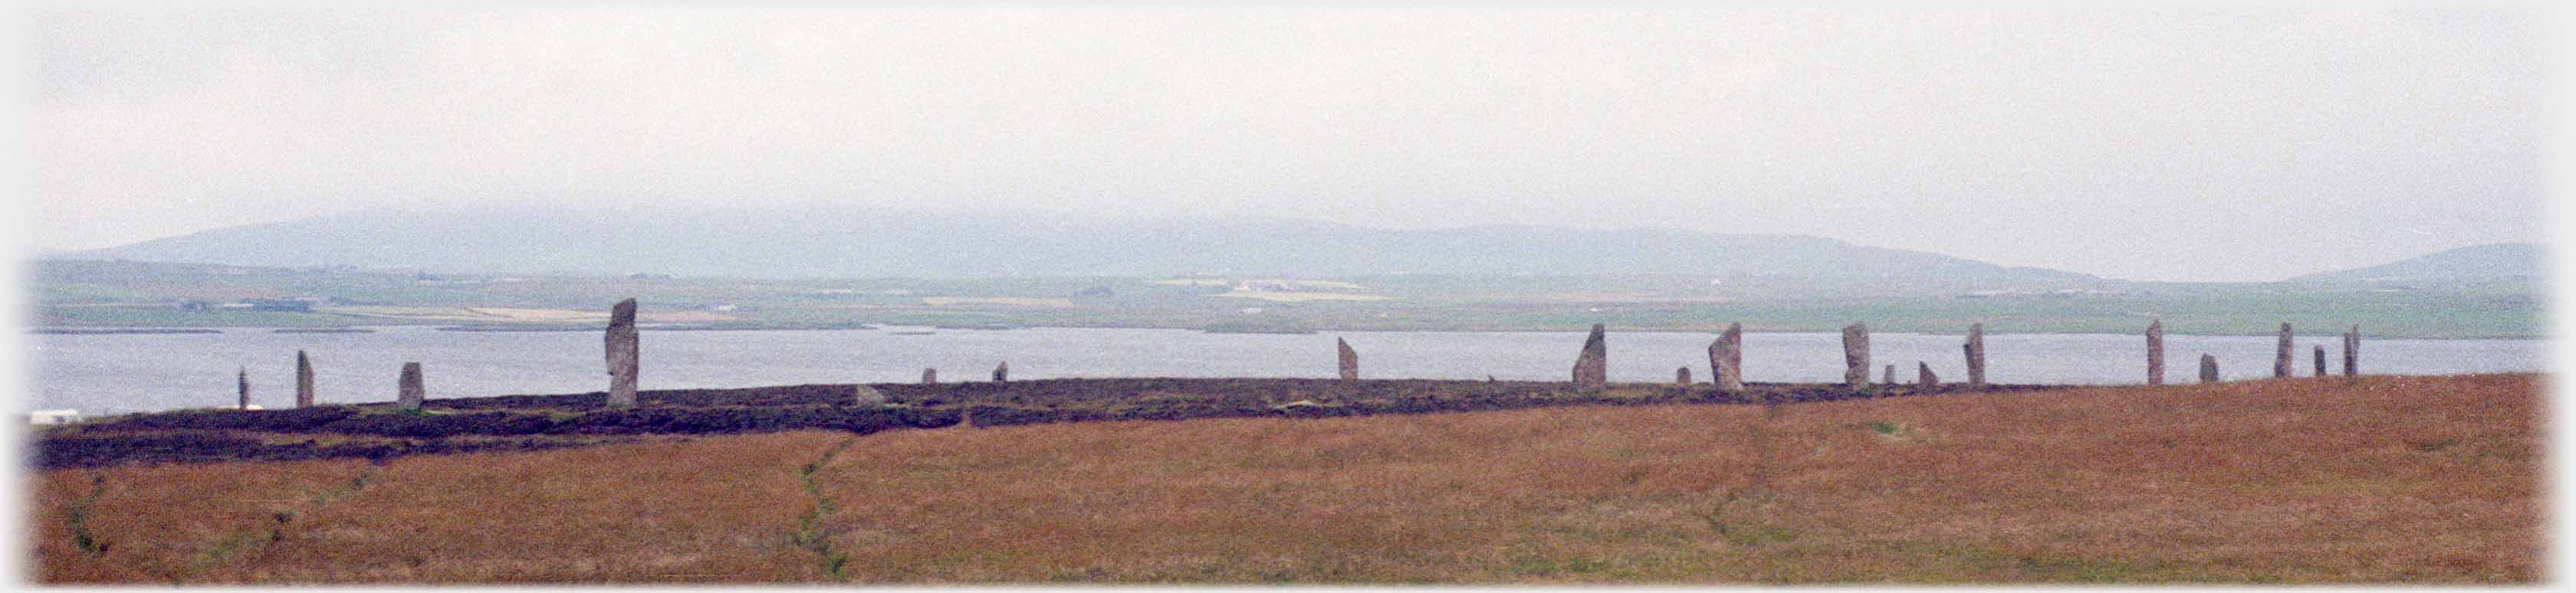 Large stone circle on near horizon, sea and hill beyond.